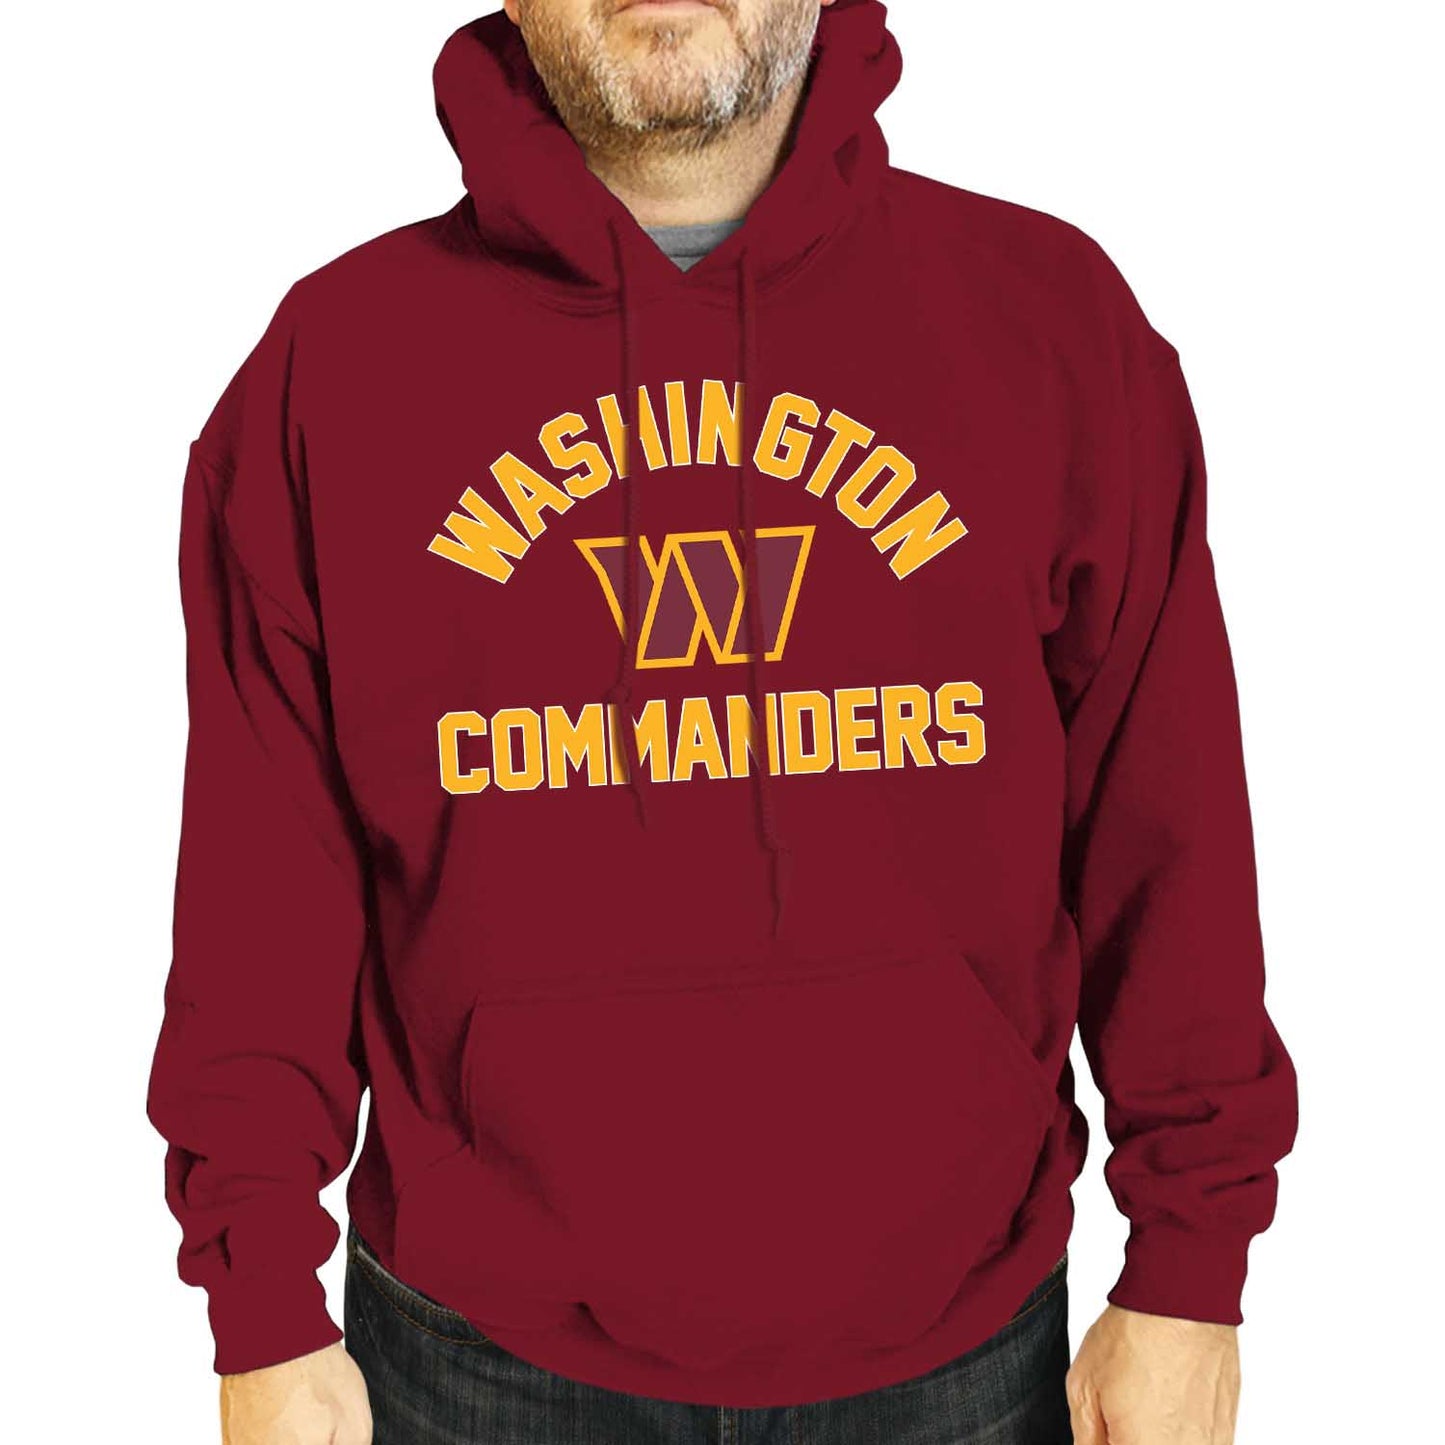 Washington Commanders NFL Adult Gameday Hooded Sweatshirt - Maroon